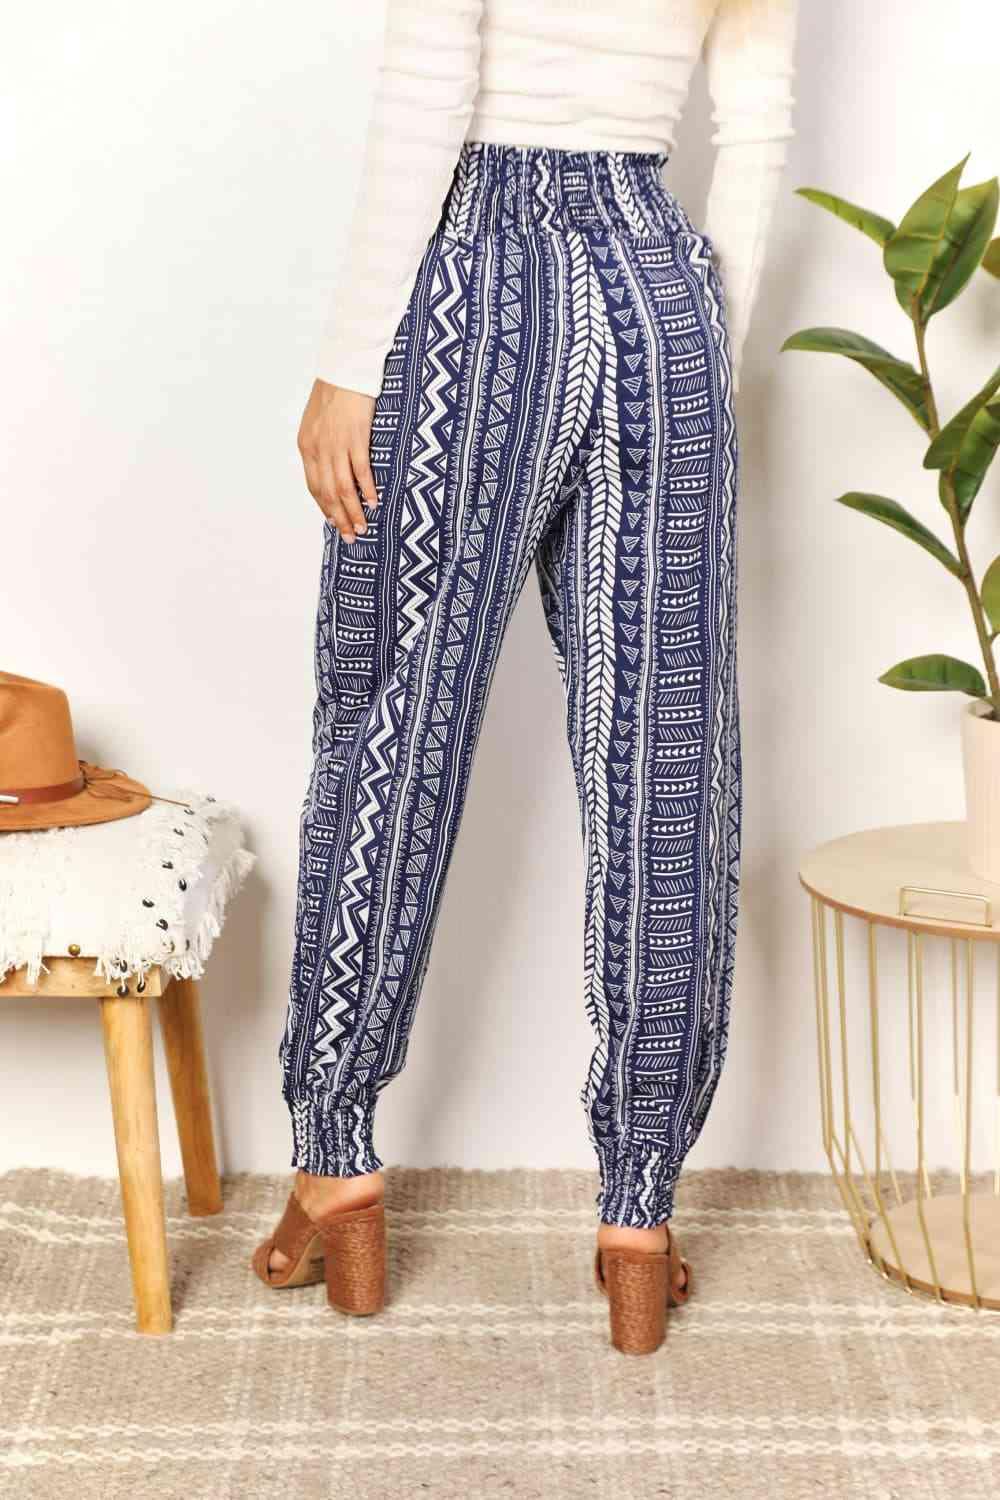 Women's Pants Double Take Geometric Print Tassel High-Rise Pants